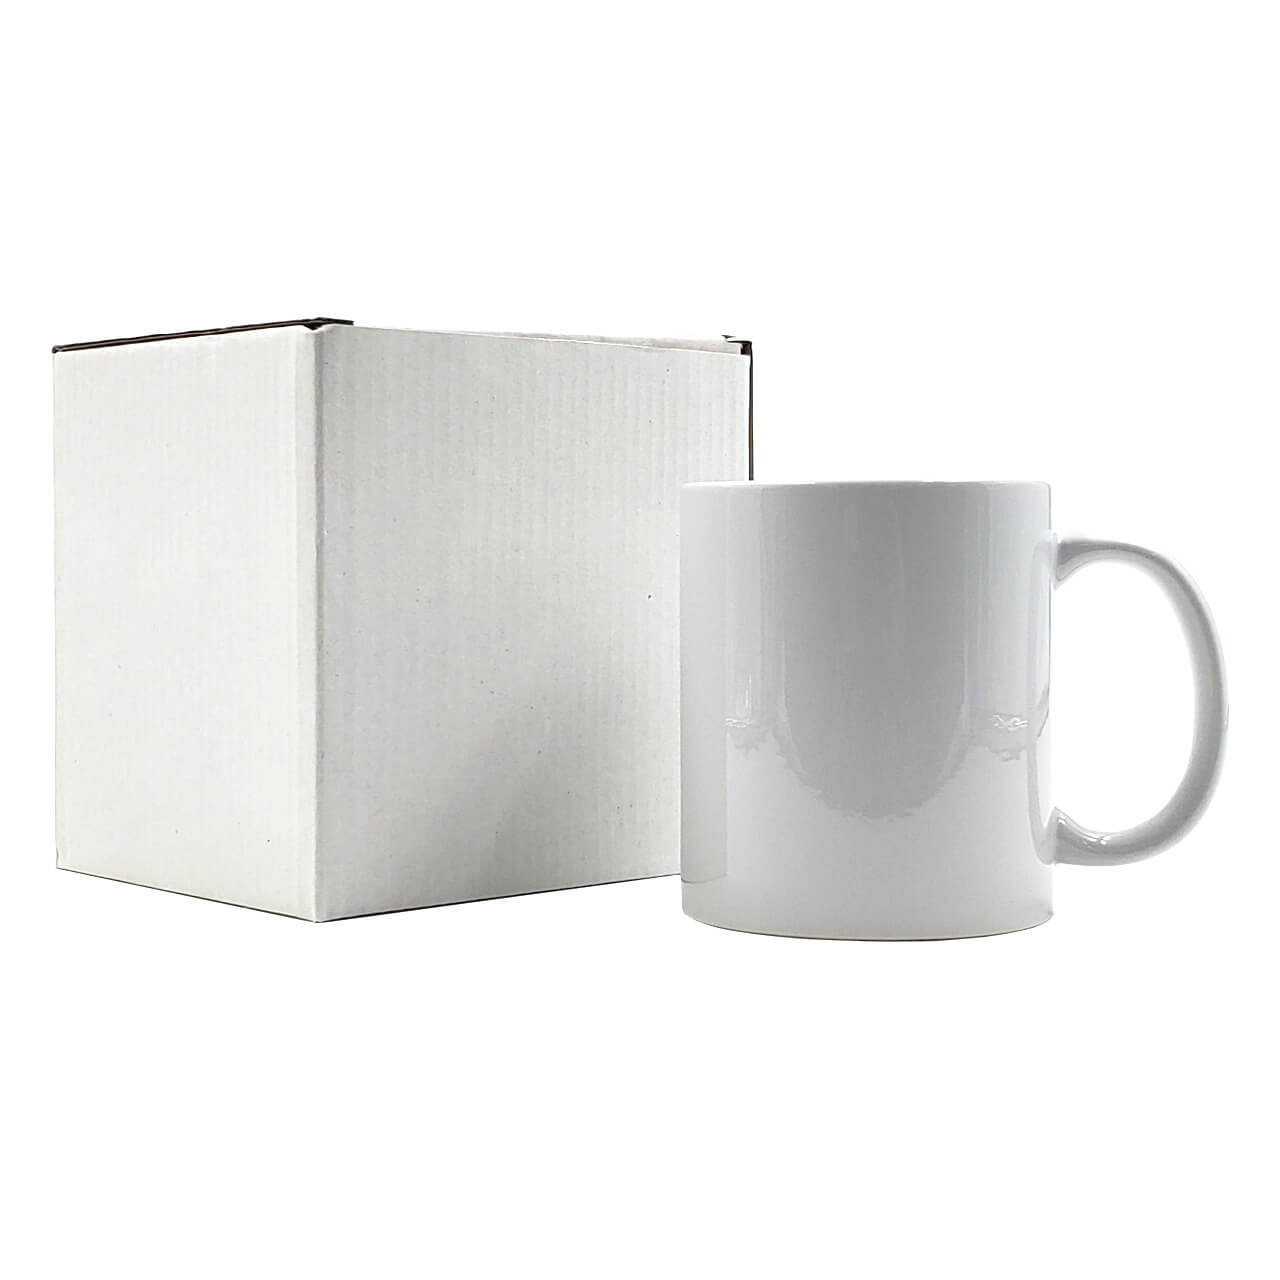 Sublimation Mugs White 11 oz with Box - GSM Florida Group, Corp.